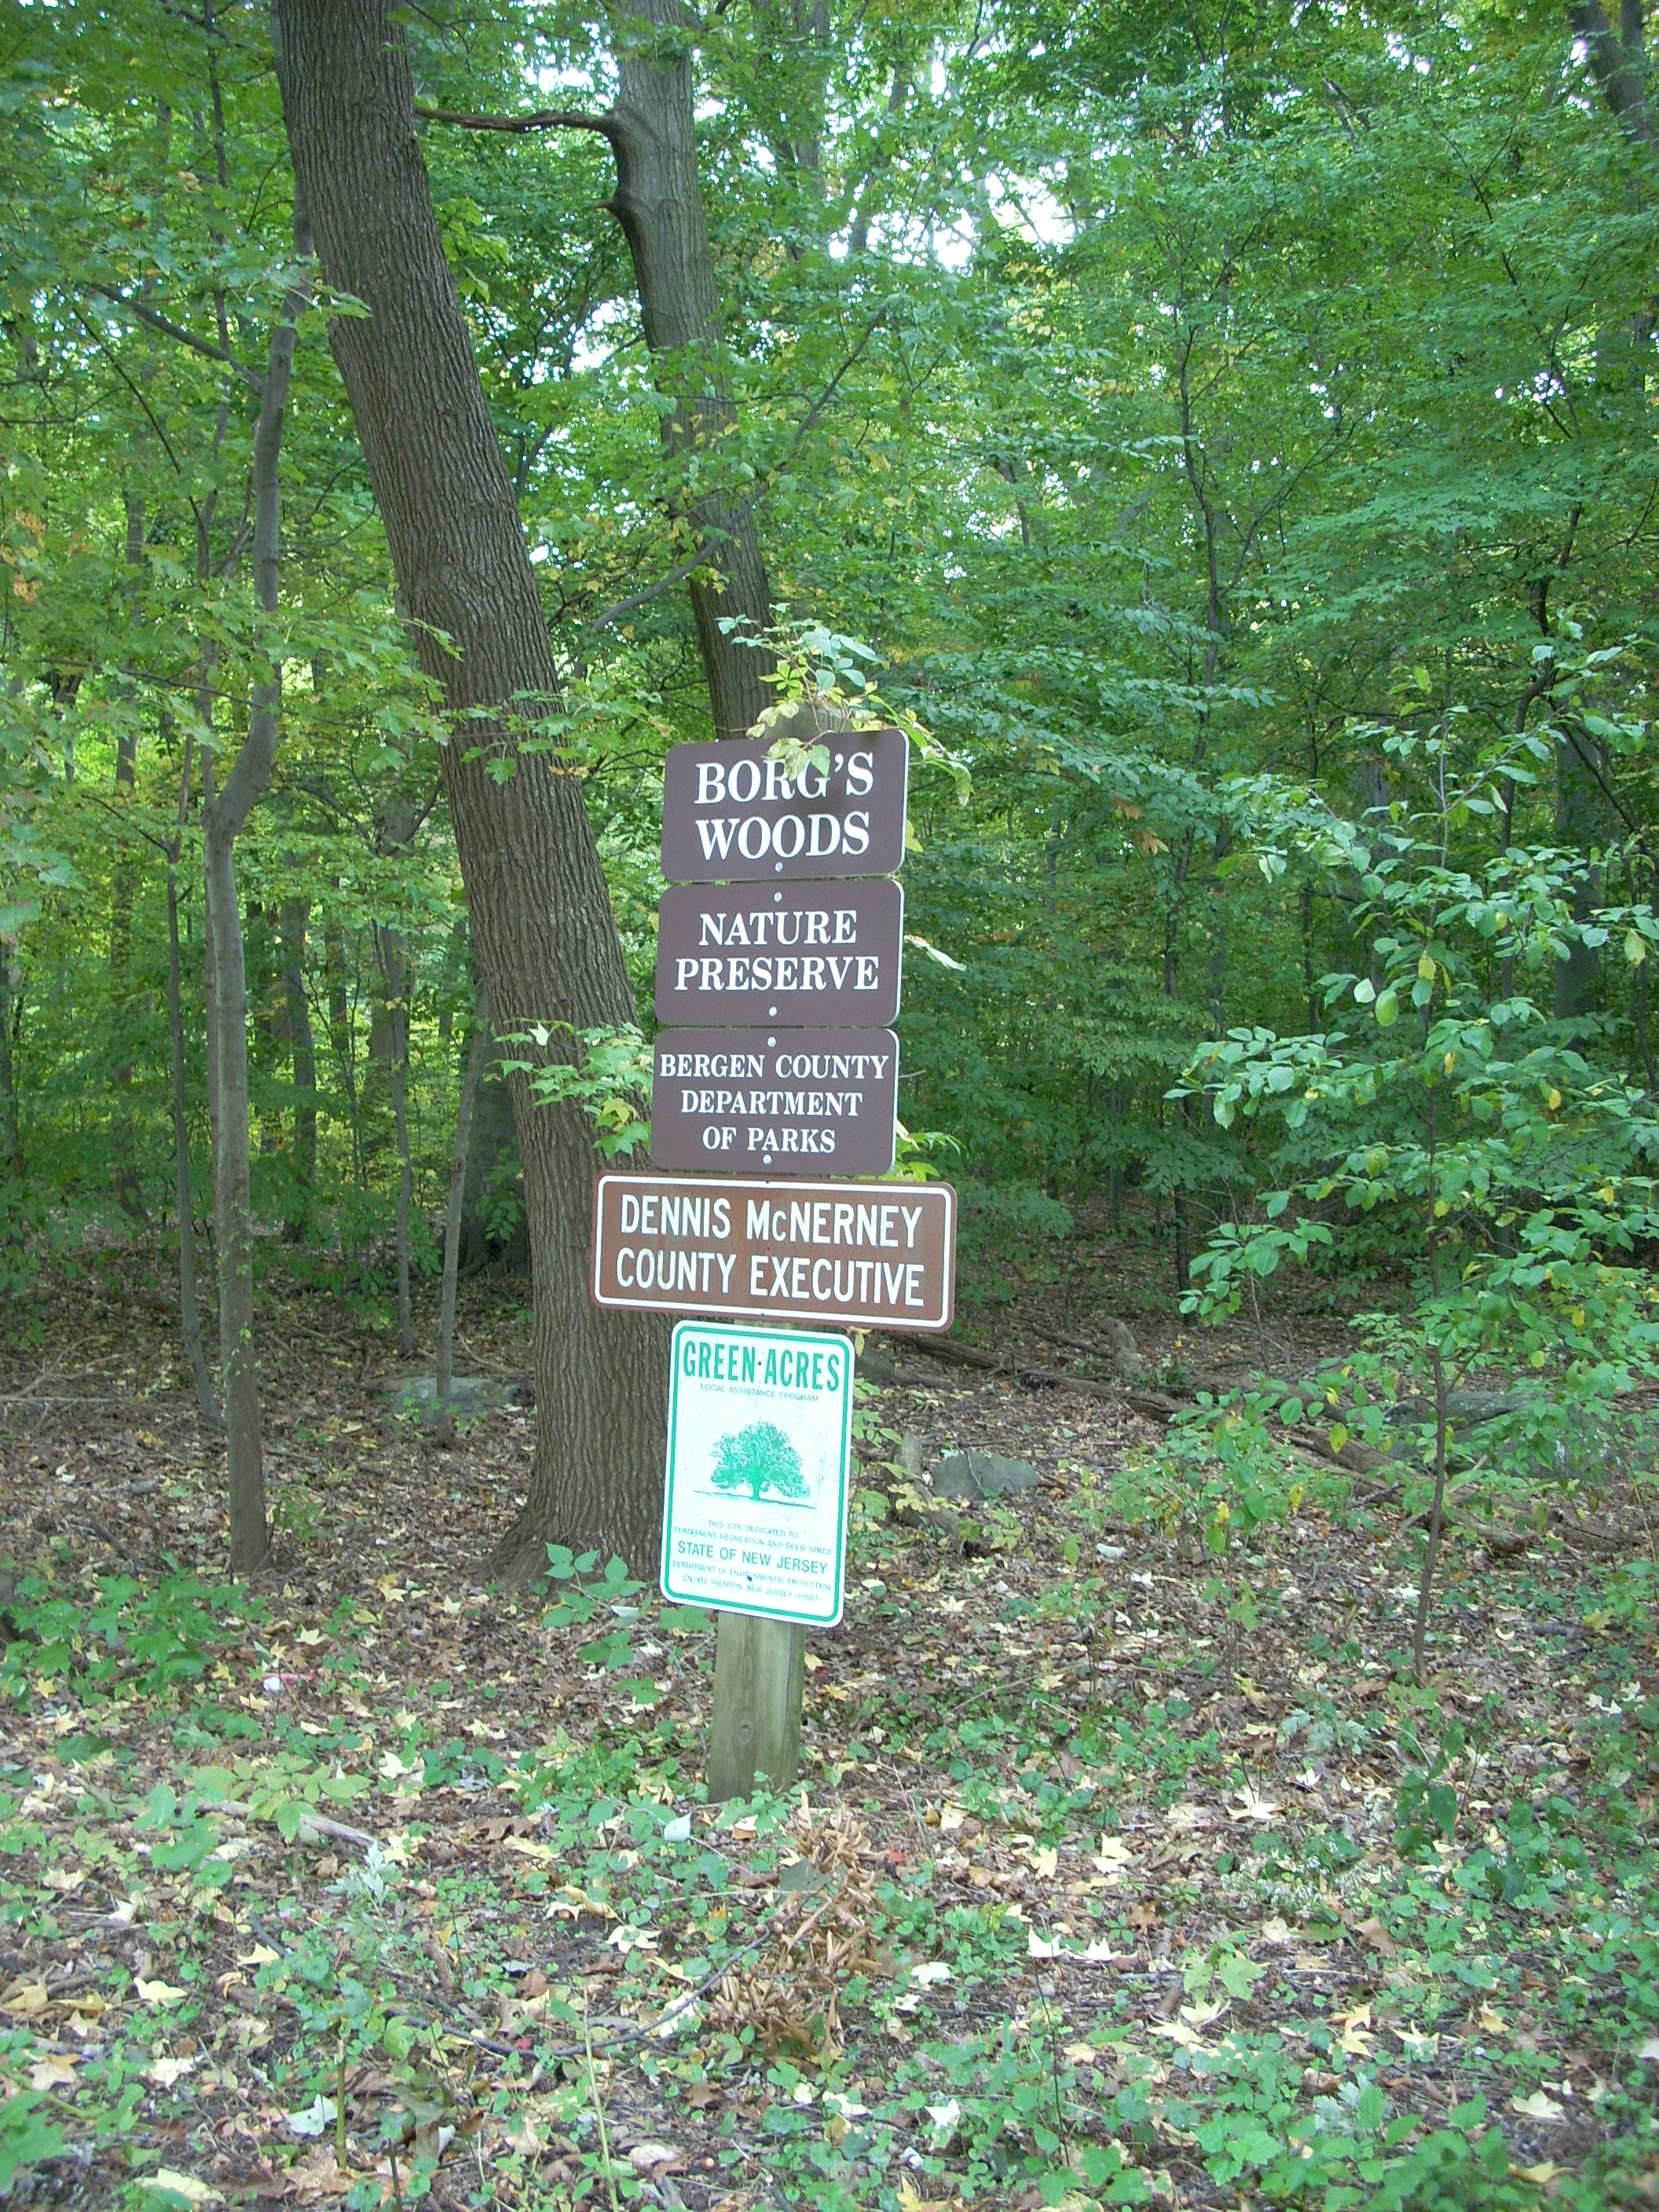 Hackensack's Borg's Woods “A Living Museum” | NJUrbanForest.com